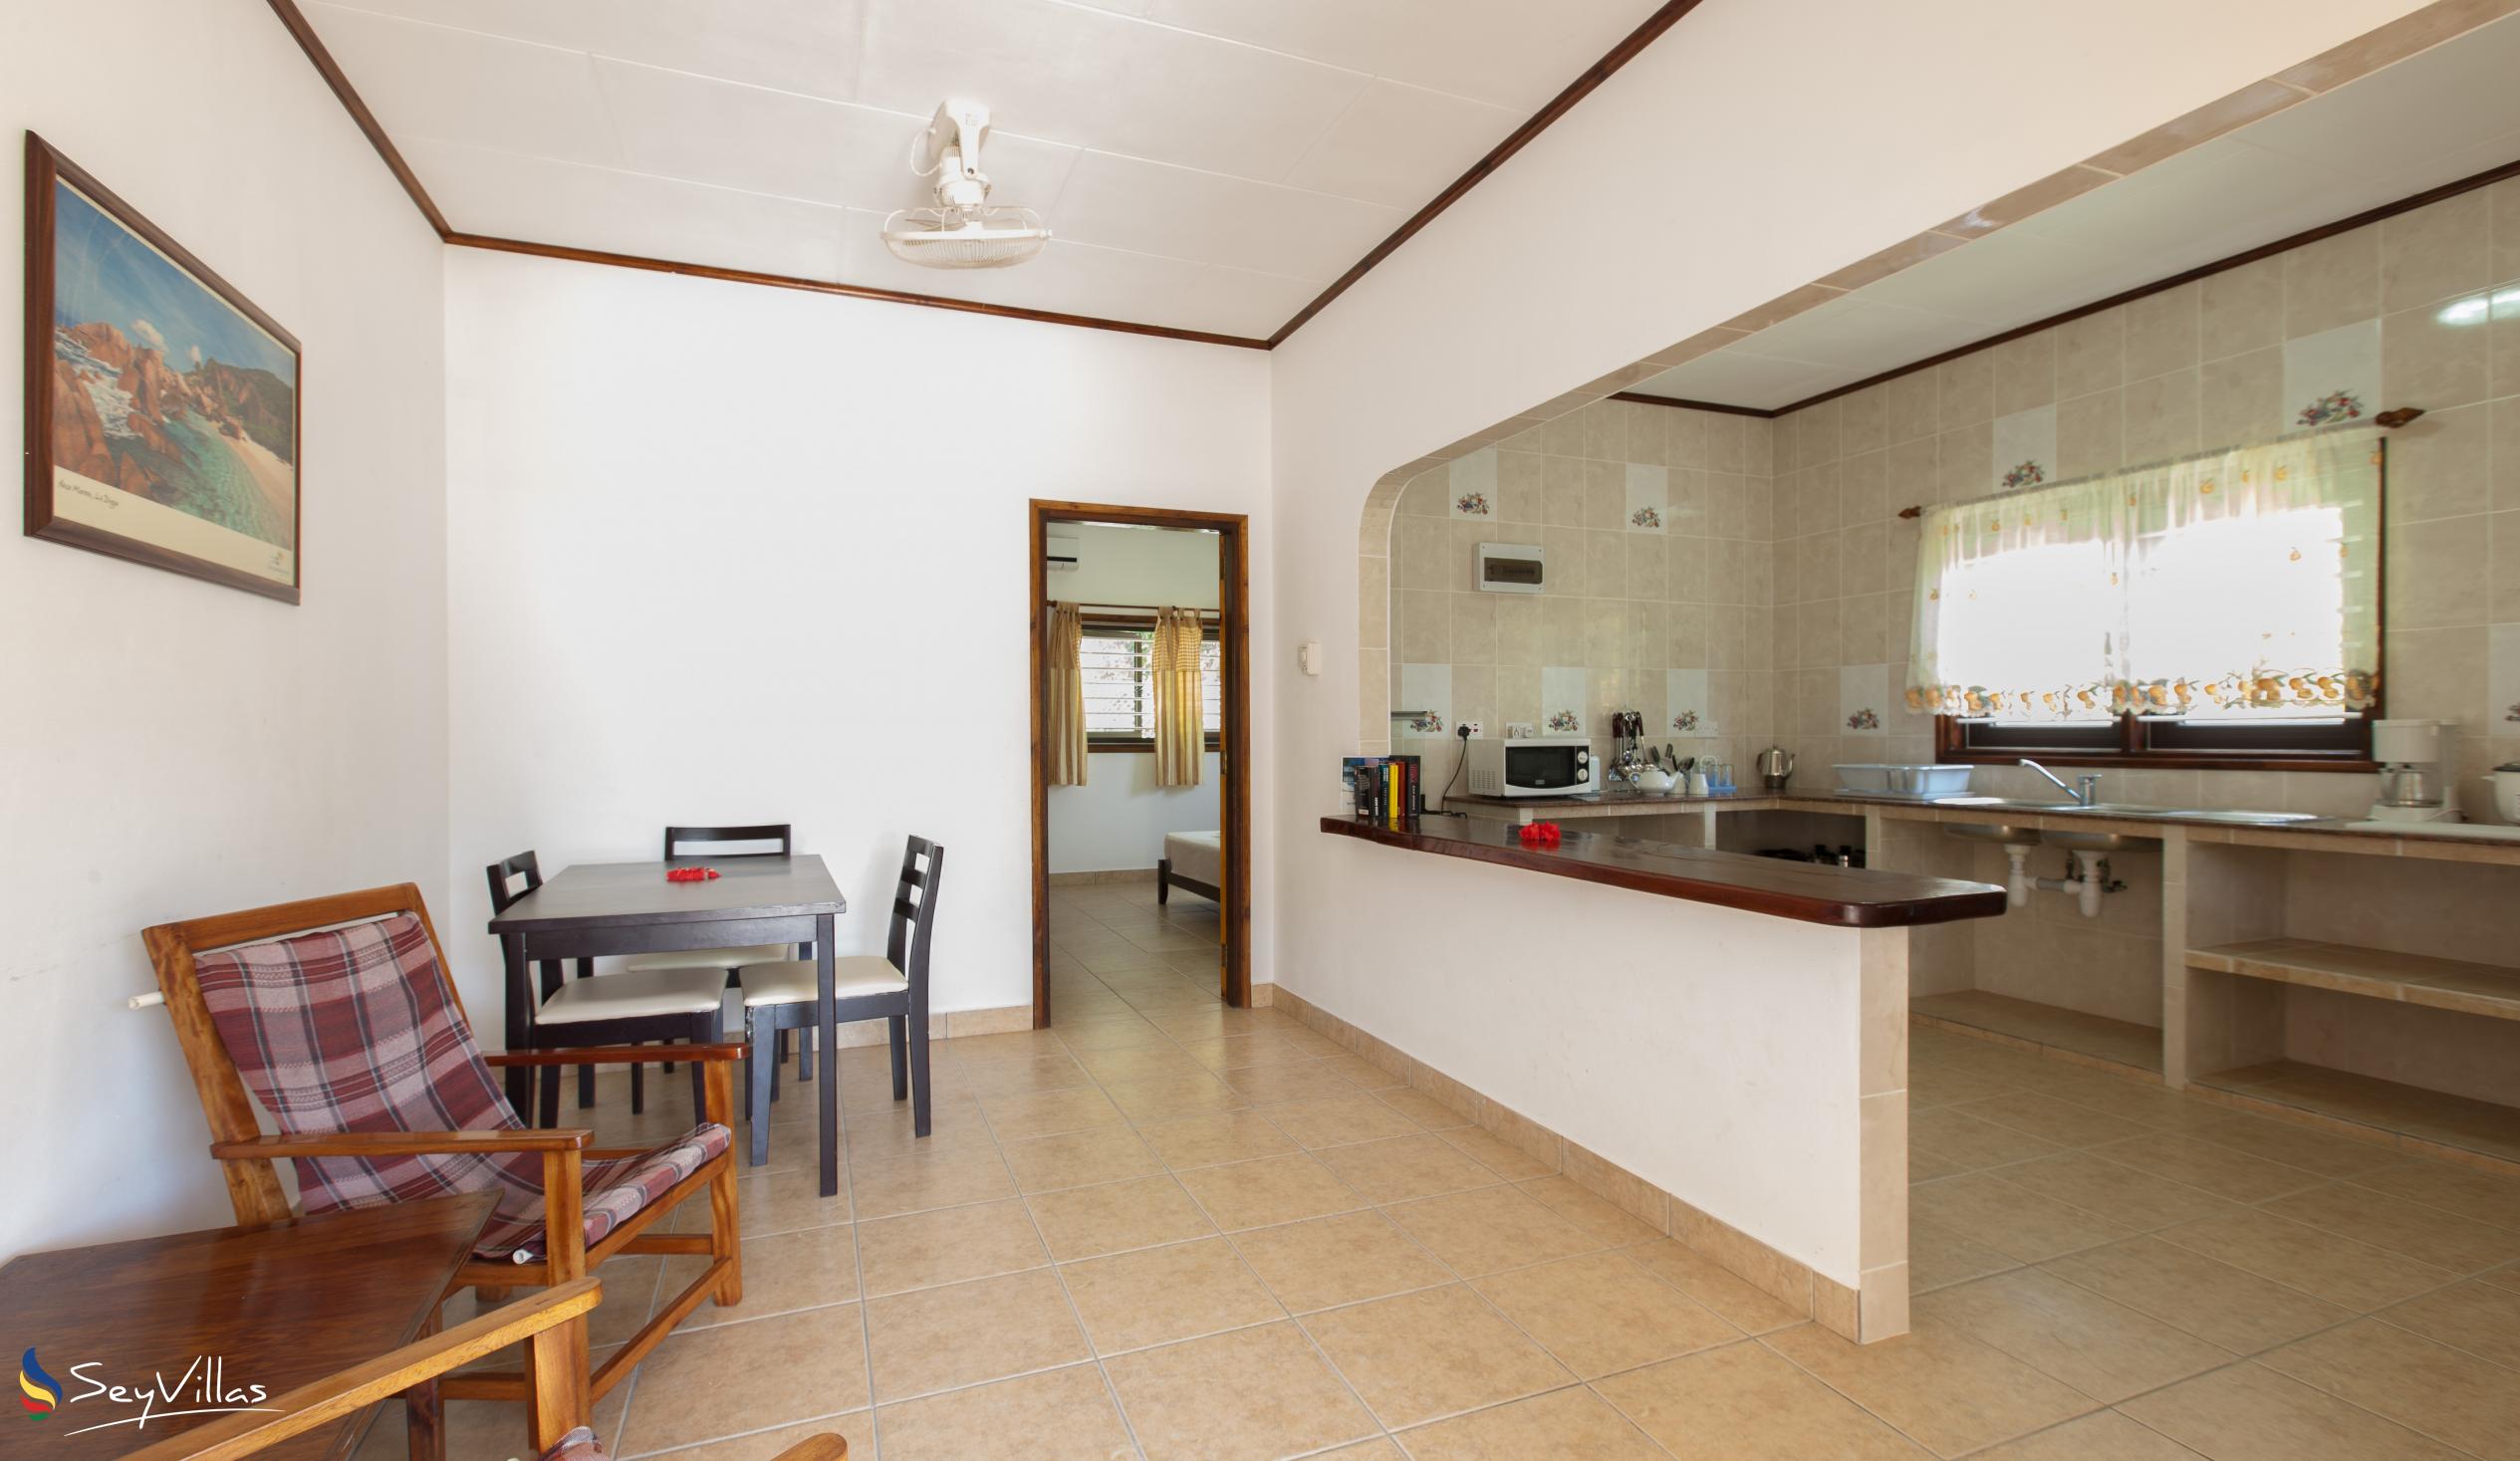 Foto 17: Zerof Self Catering  Apartments - Appartement à 1 chambre - La Digue (Seychelles)